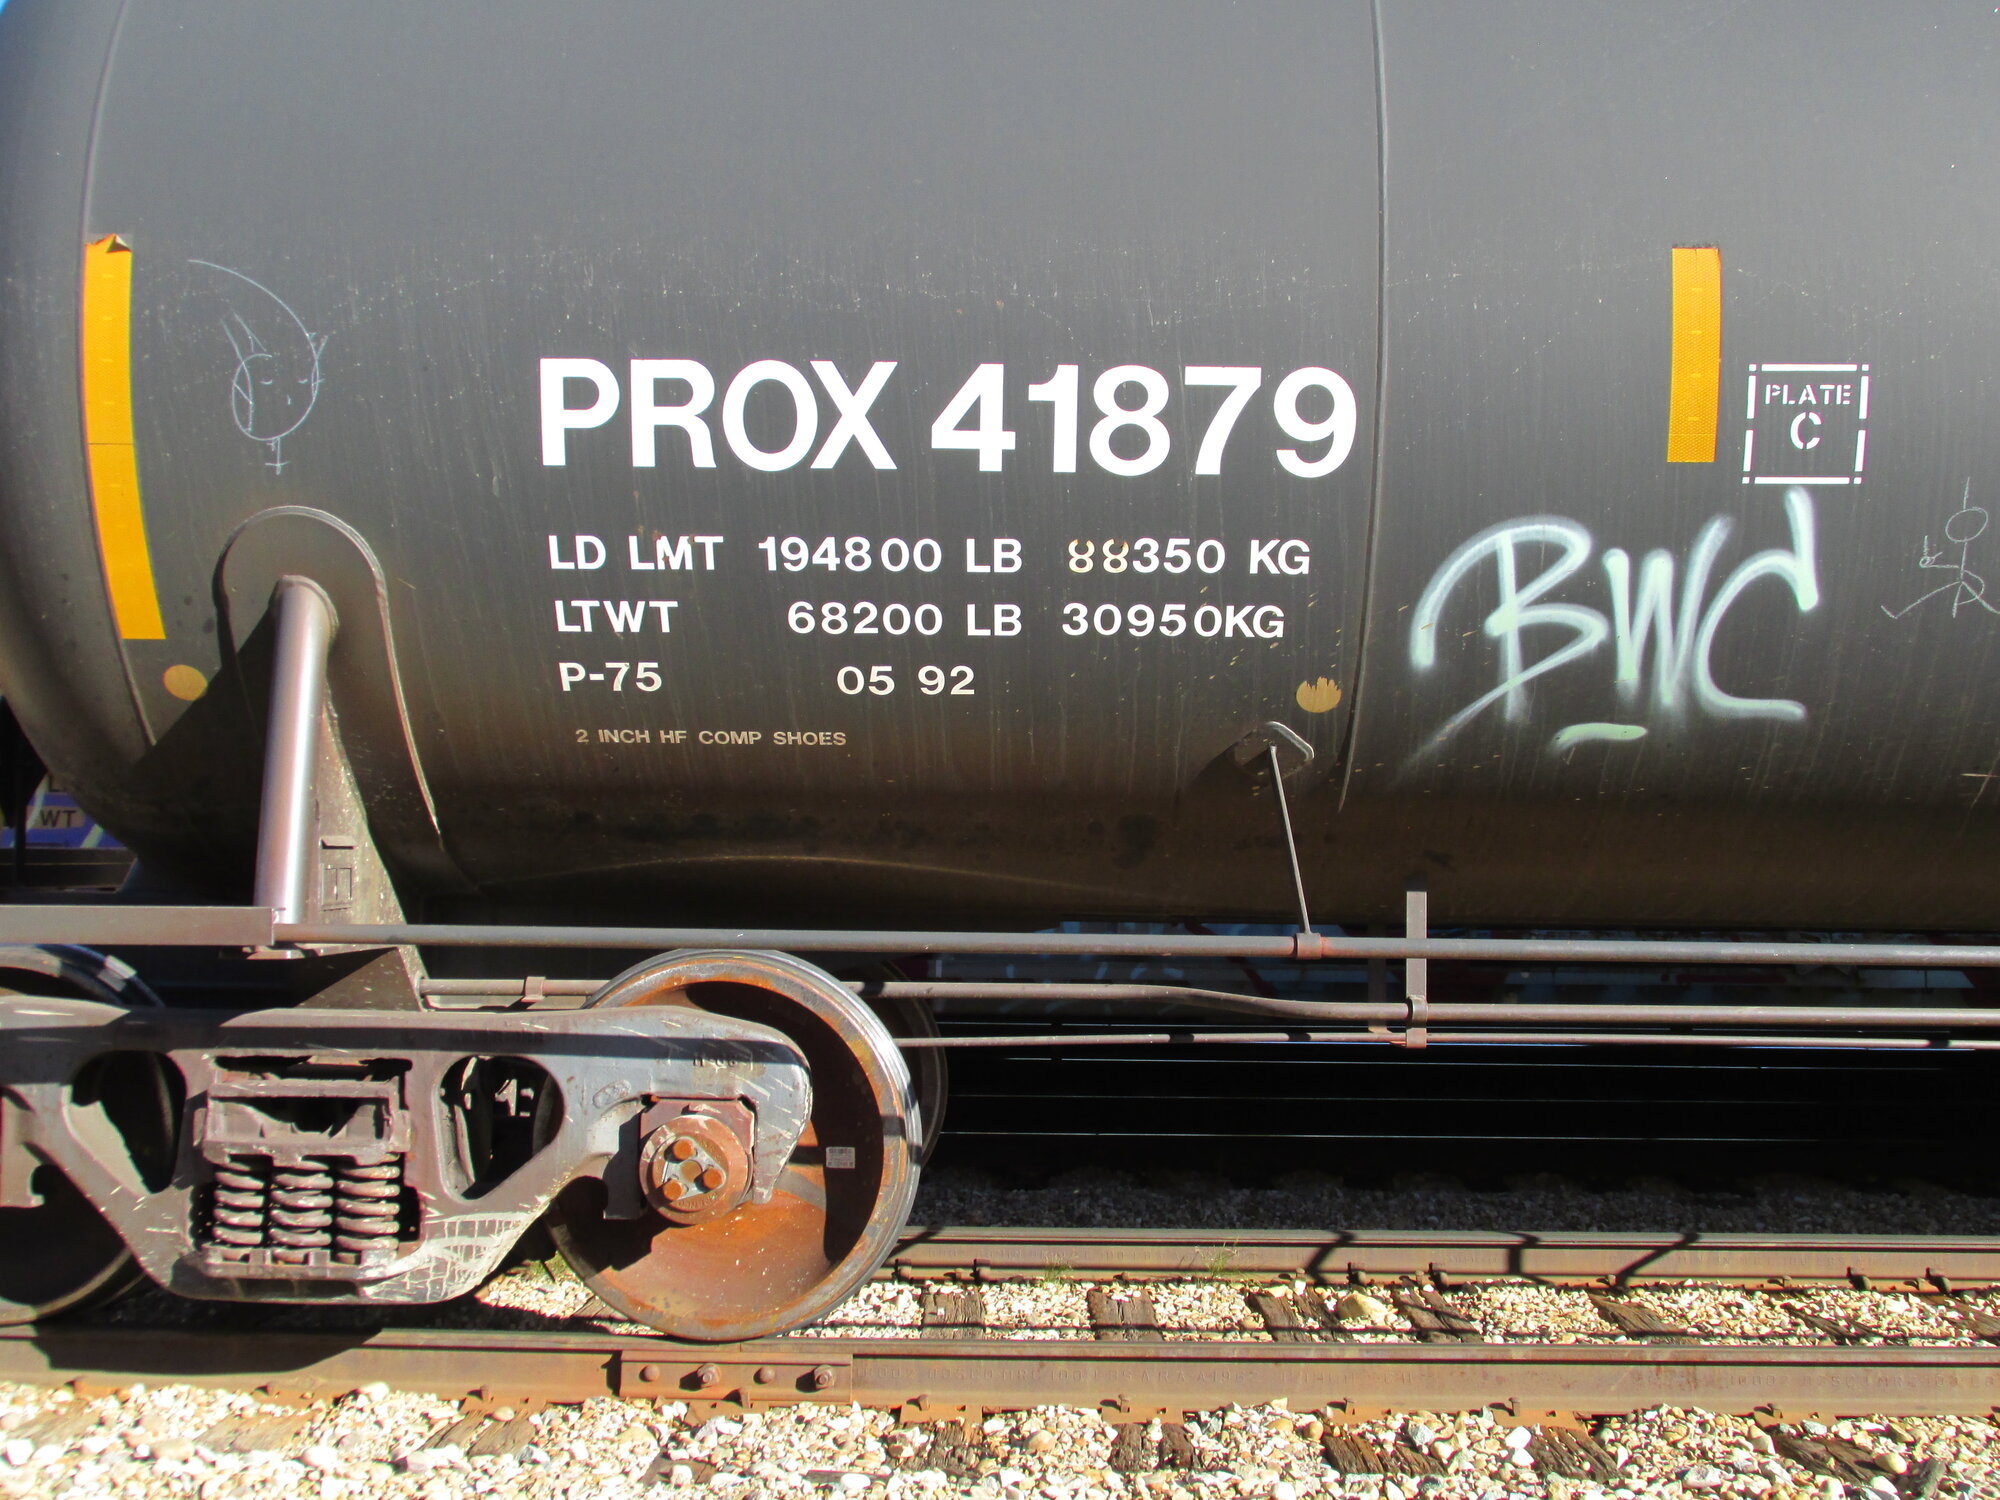 Tank_PROX 41879_09-26-2020 (5).JPG